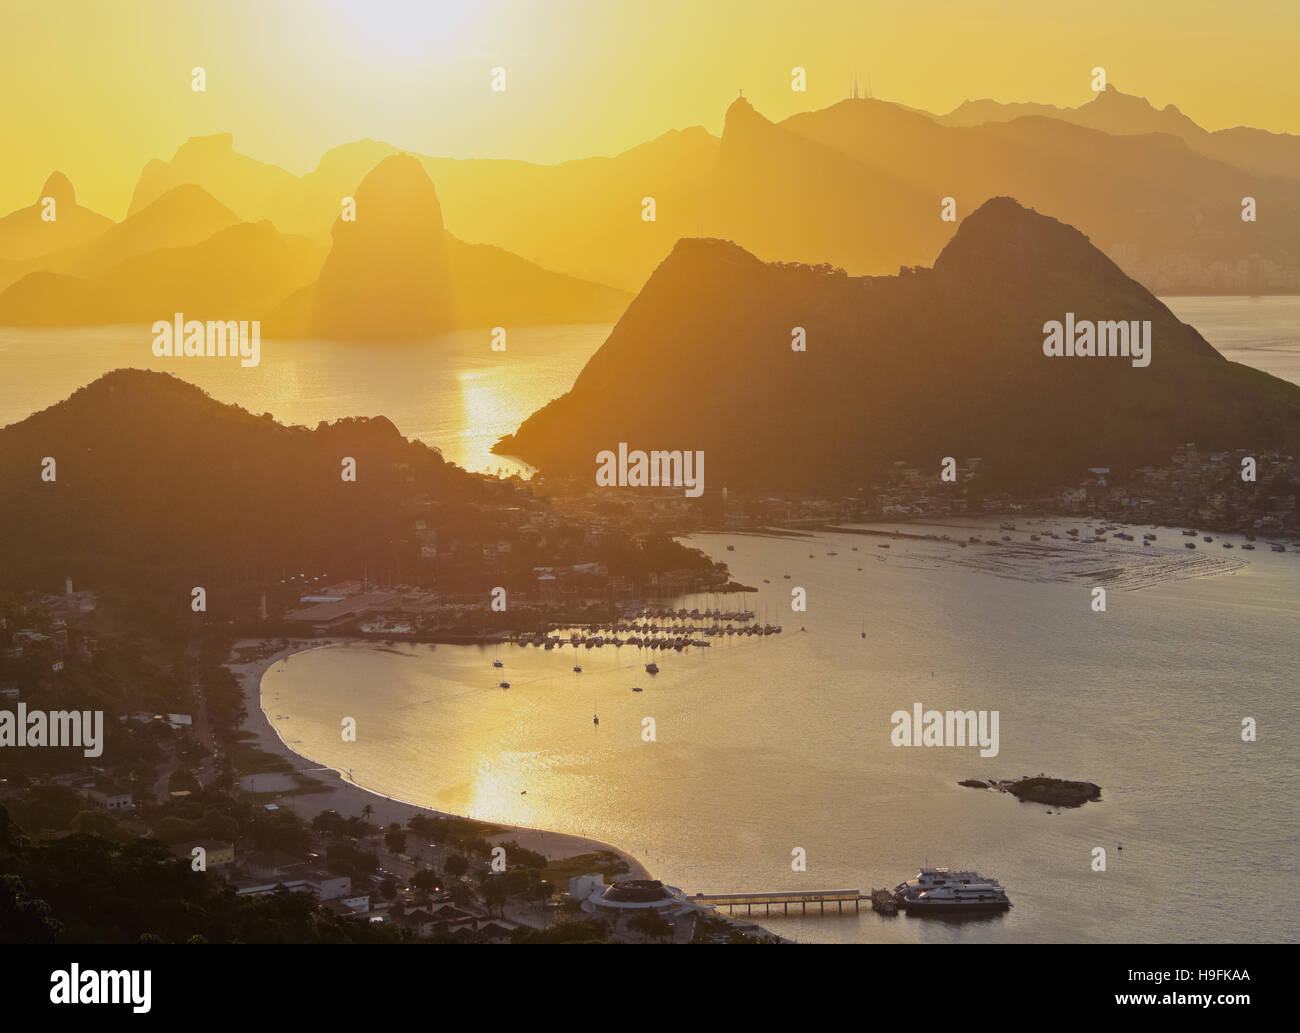 Brazil, State of Rio de Janeiro, Sunset over Rio de Janeiro viewed from Parque da Cidade in Niteroi. Stock Photo